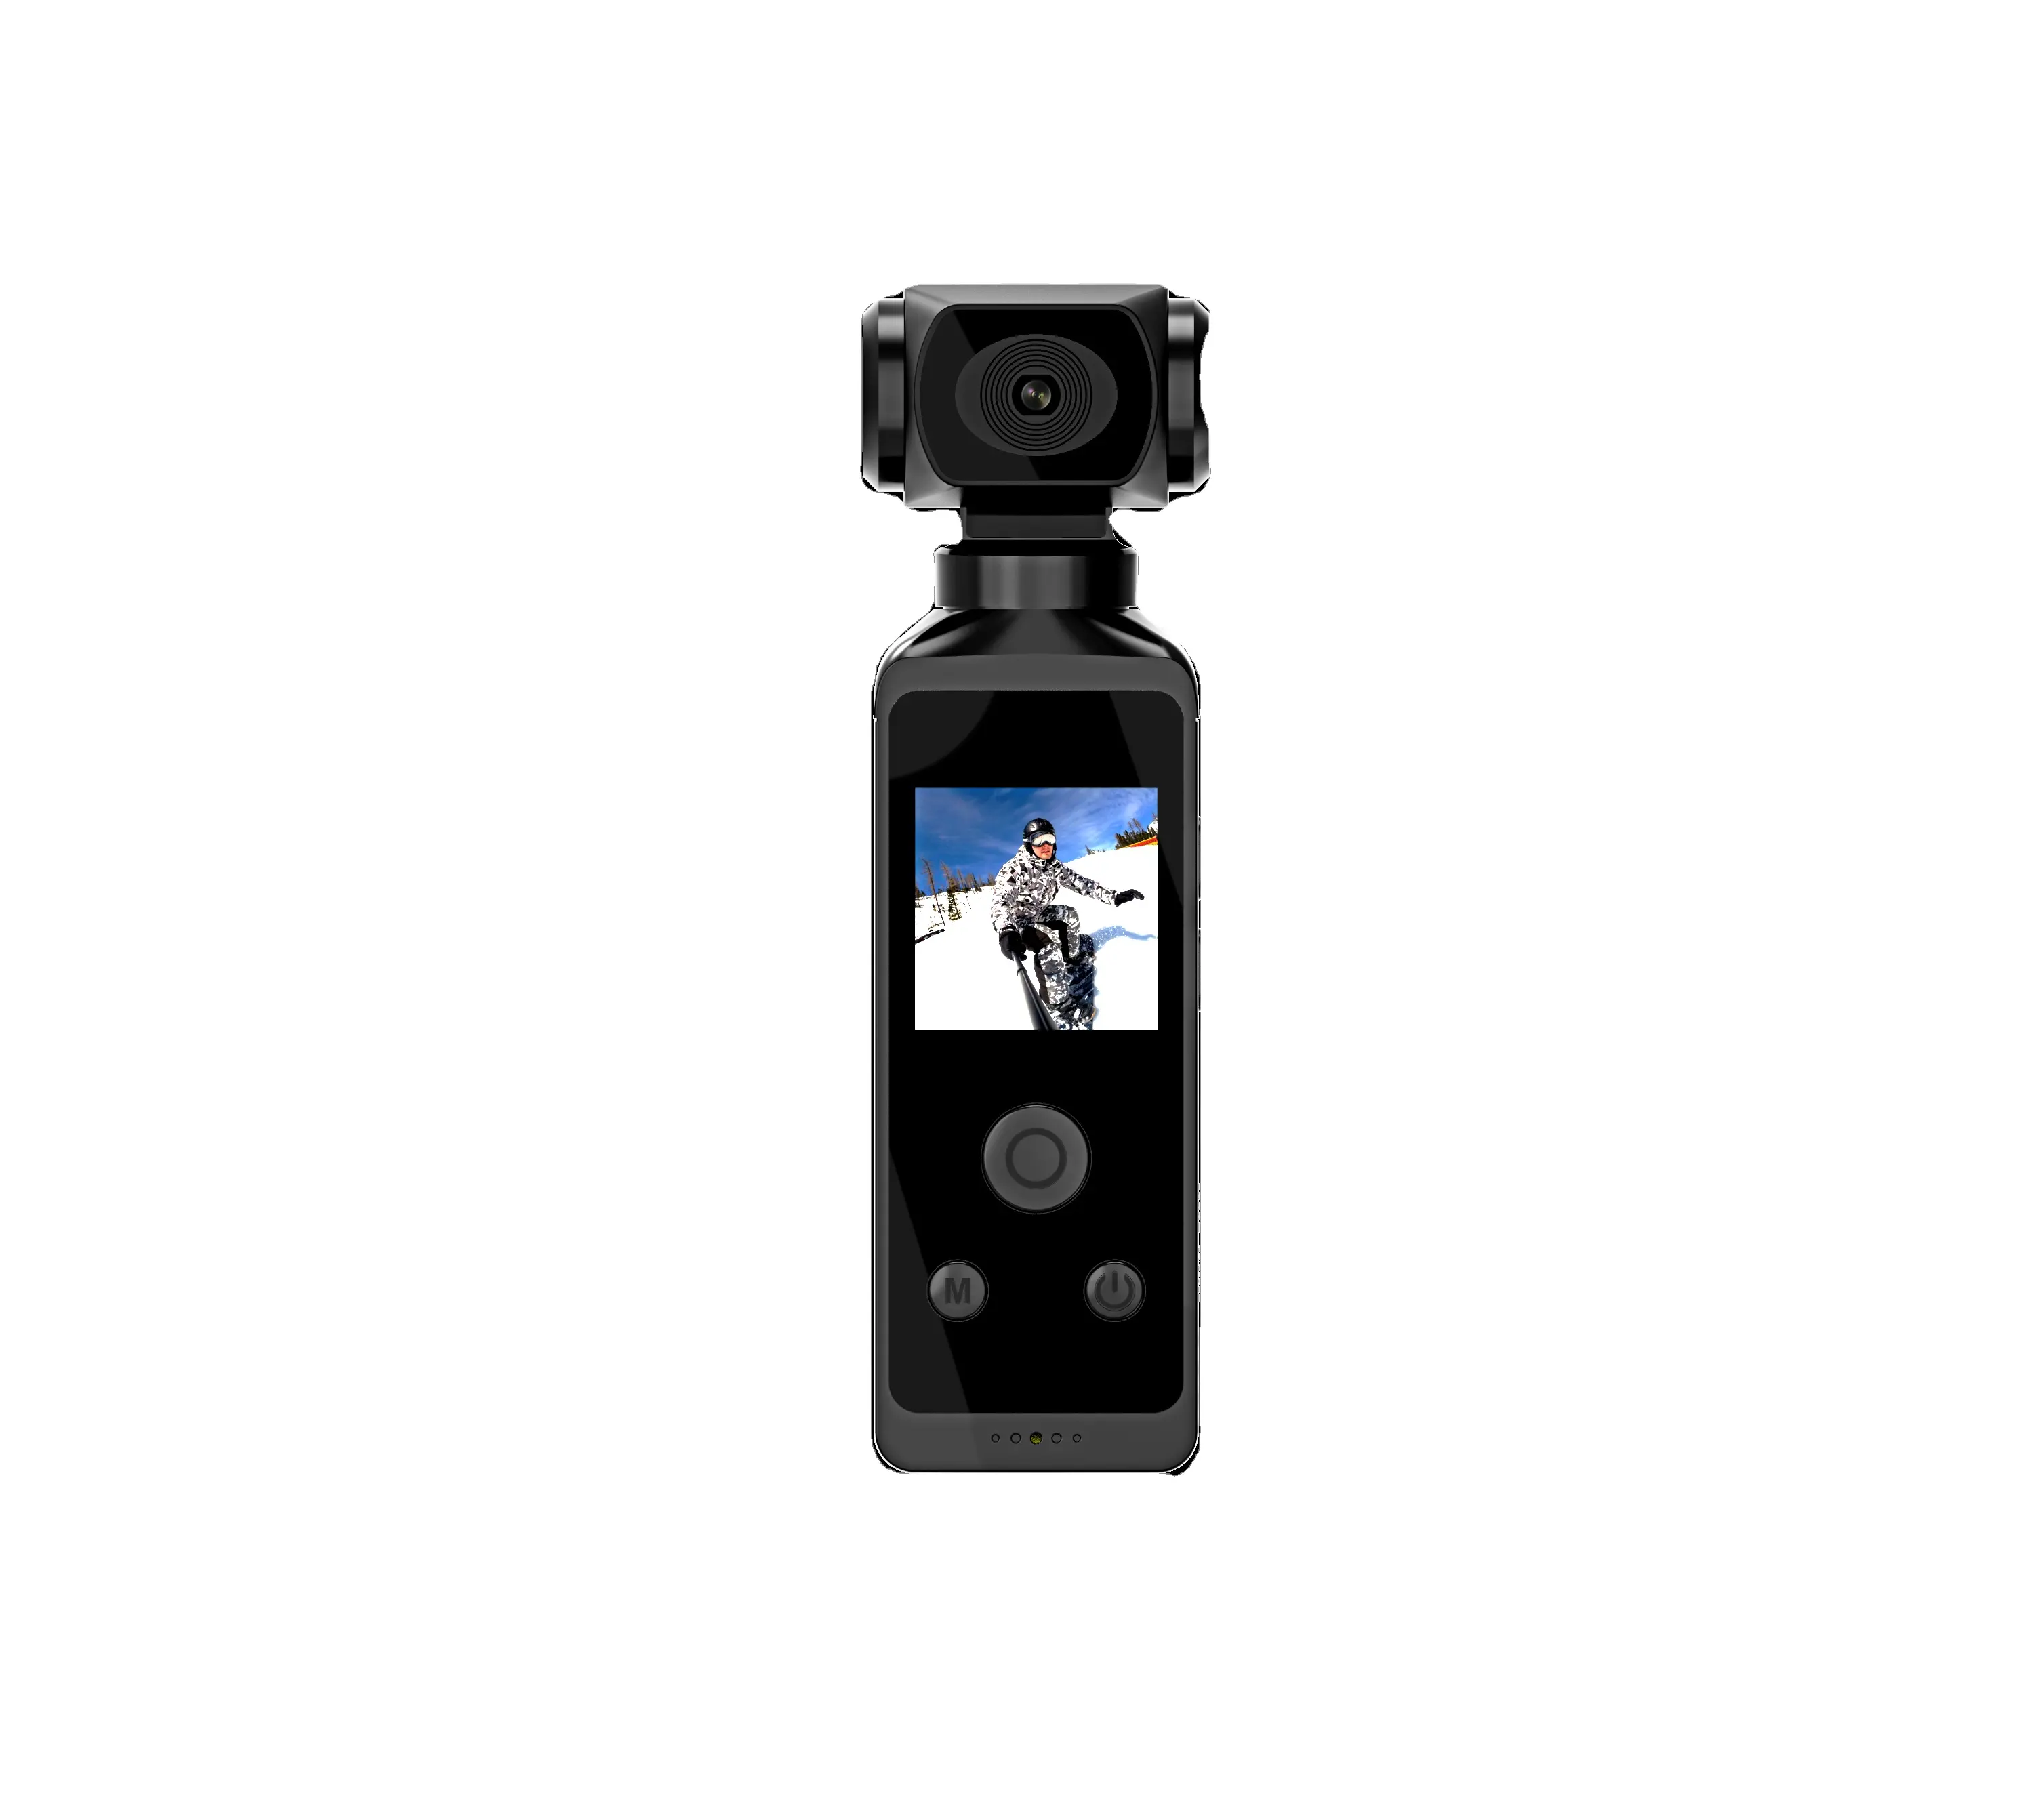 OEM防水HD1080p Wifiスポーツアクションカメラキッドポケットカメラディスプレイ防水30M